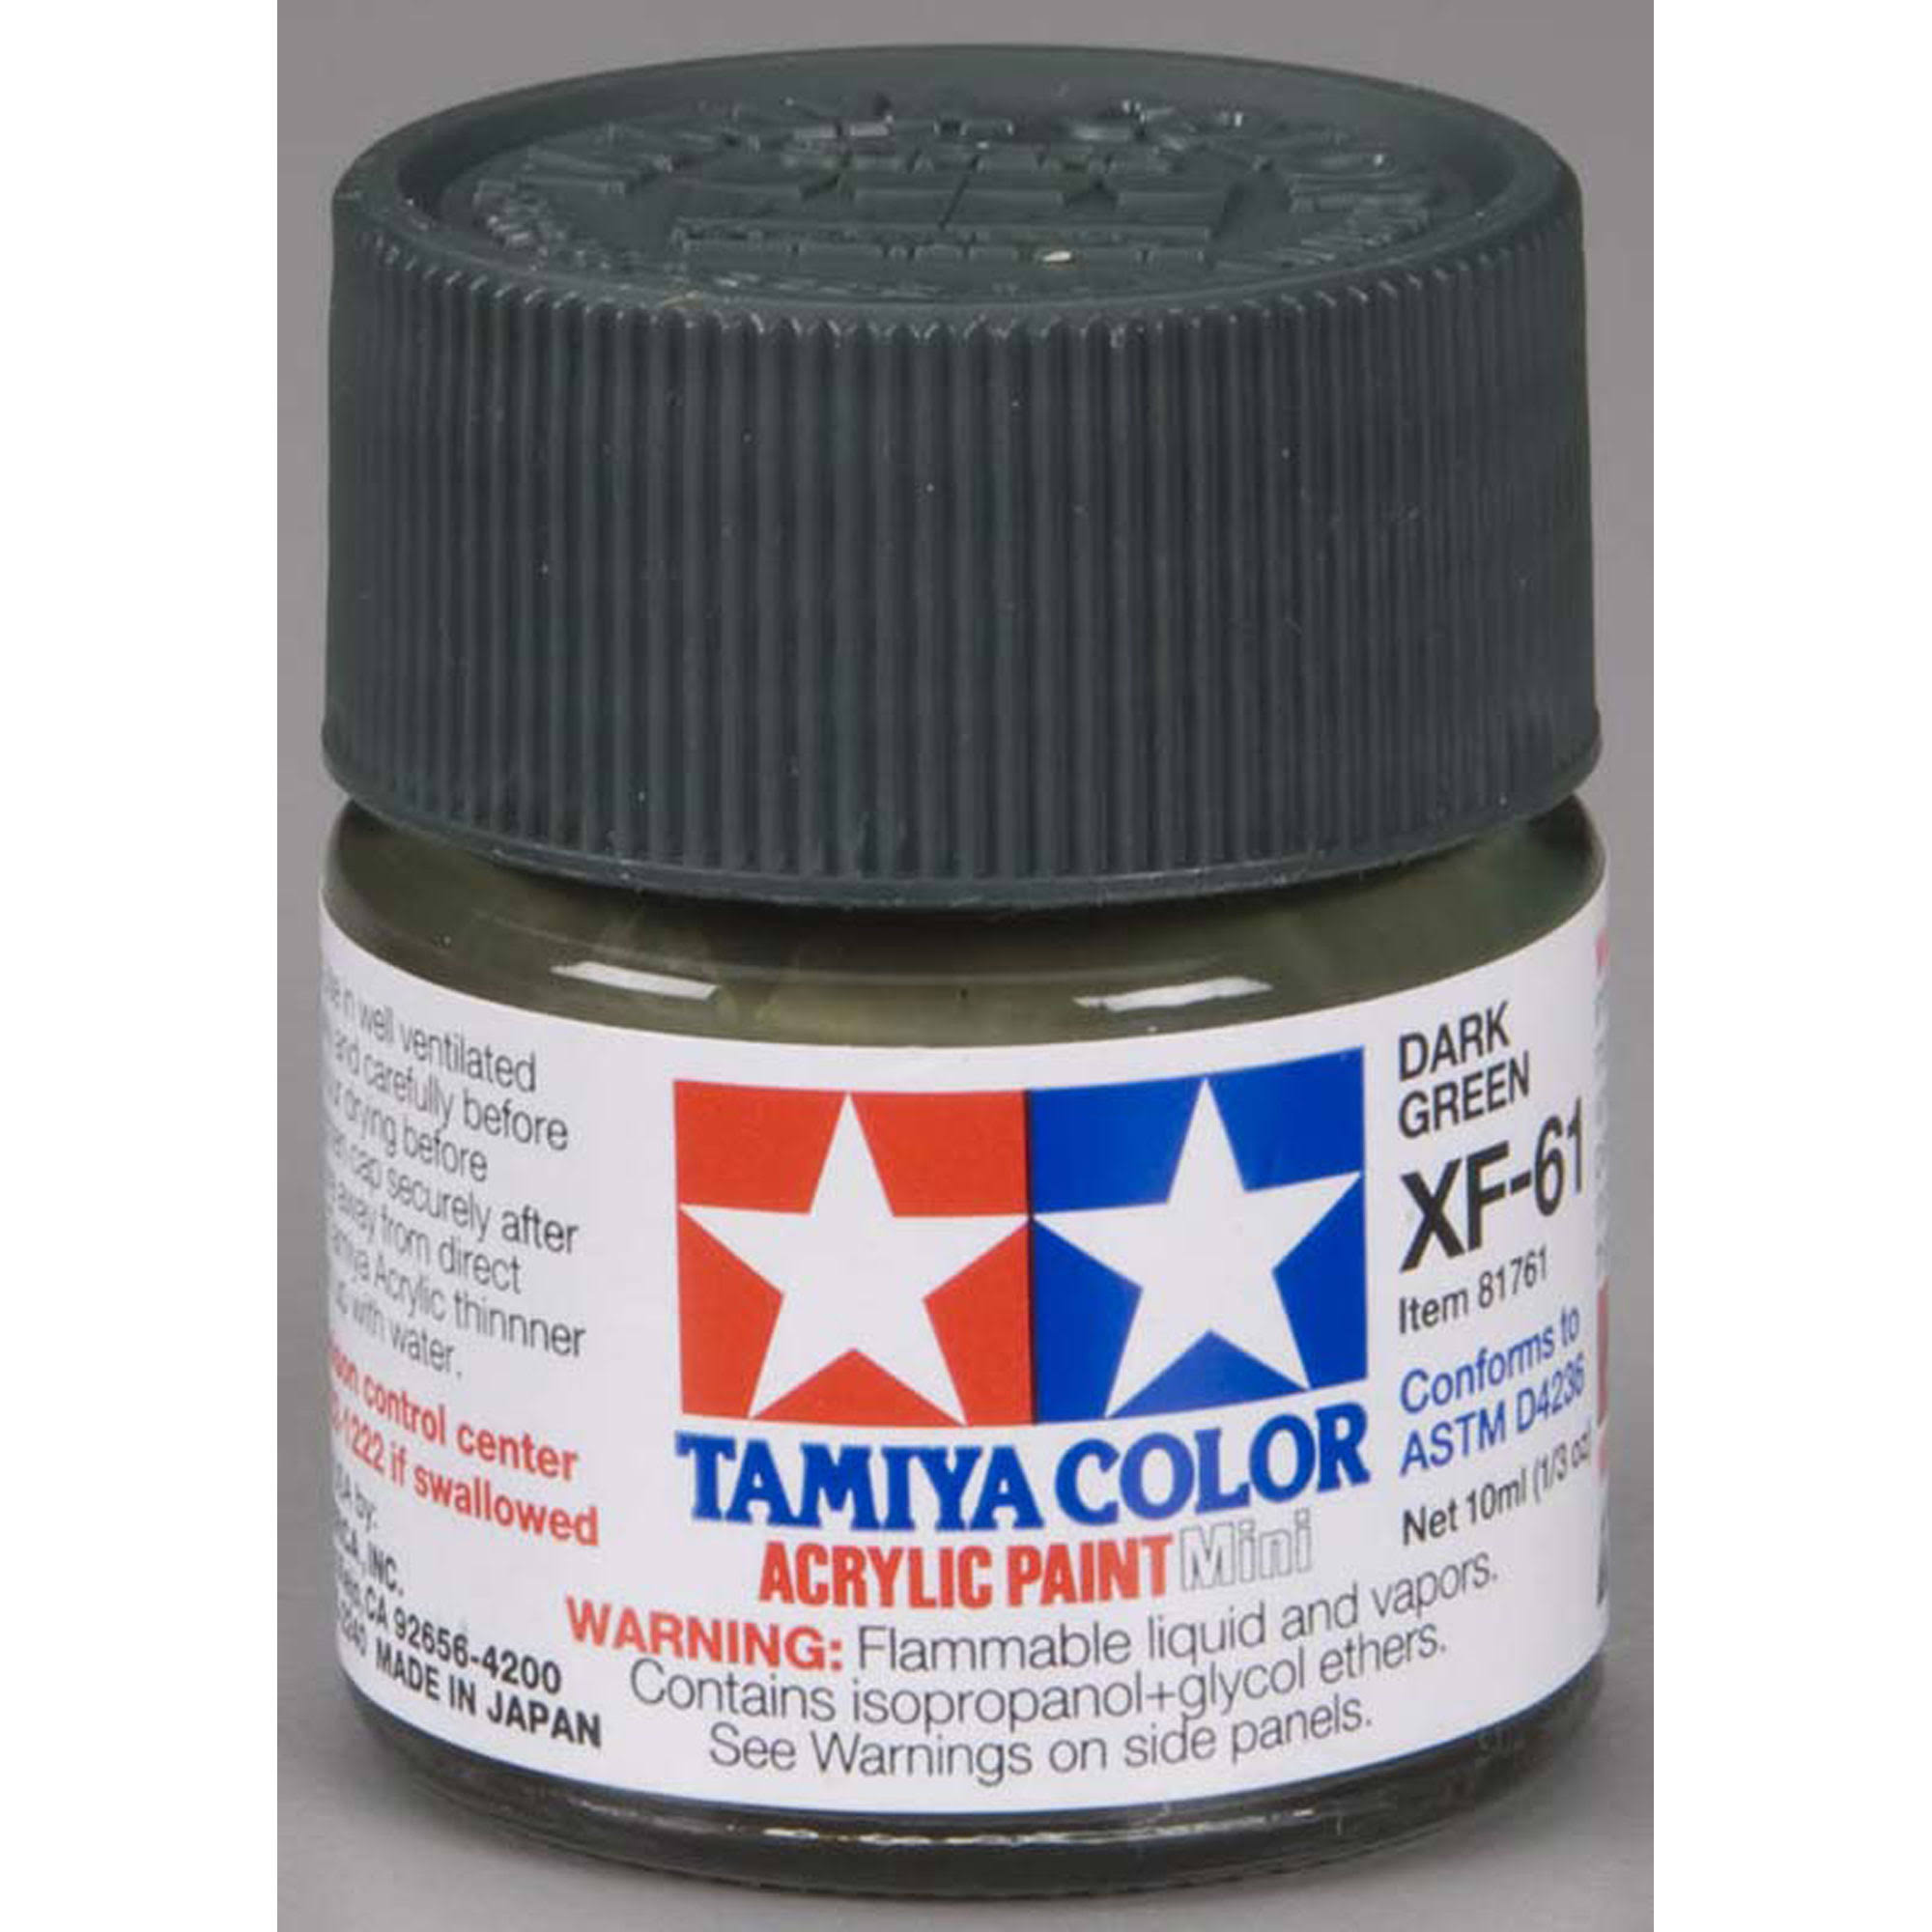 TAMIYA XF-61 - Acrylic paint Dark Green 10 ml